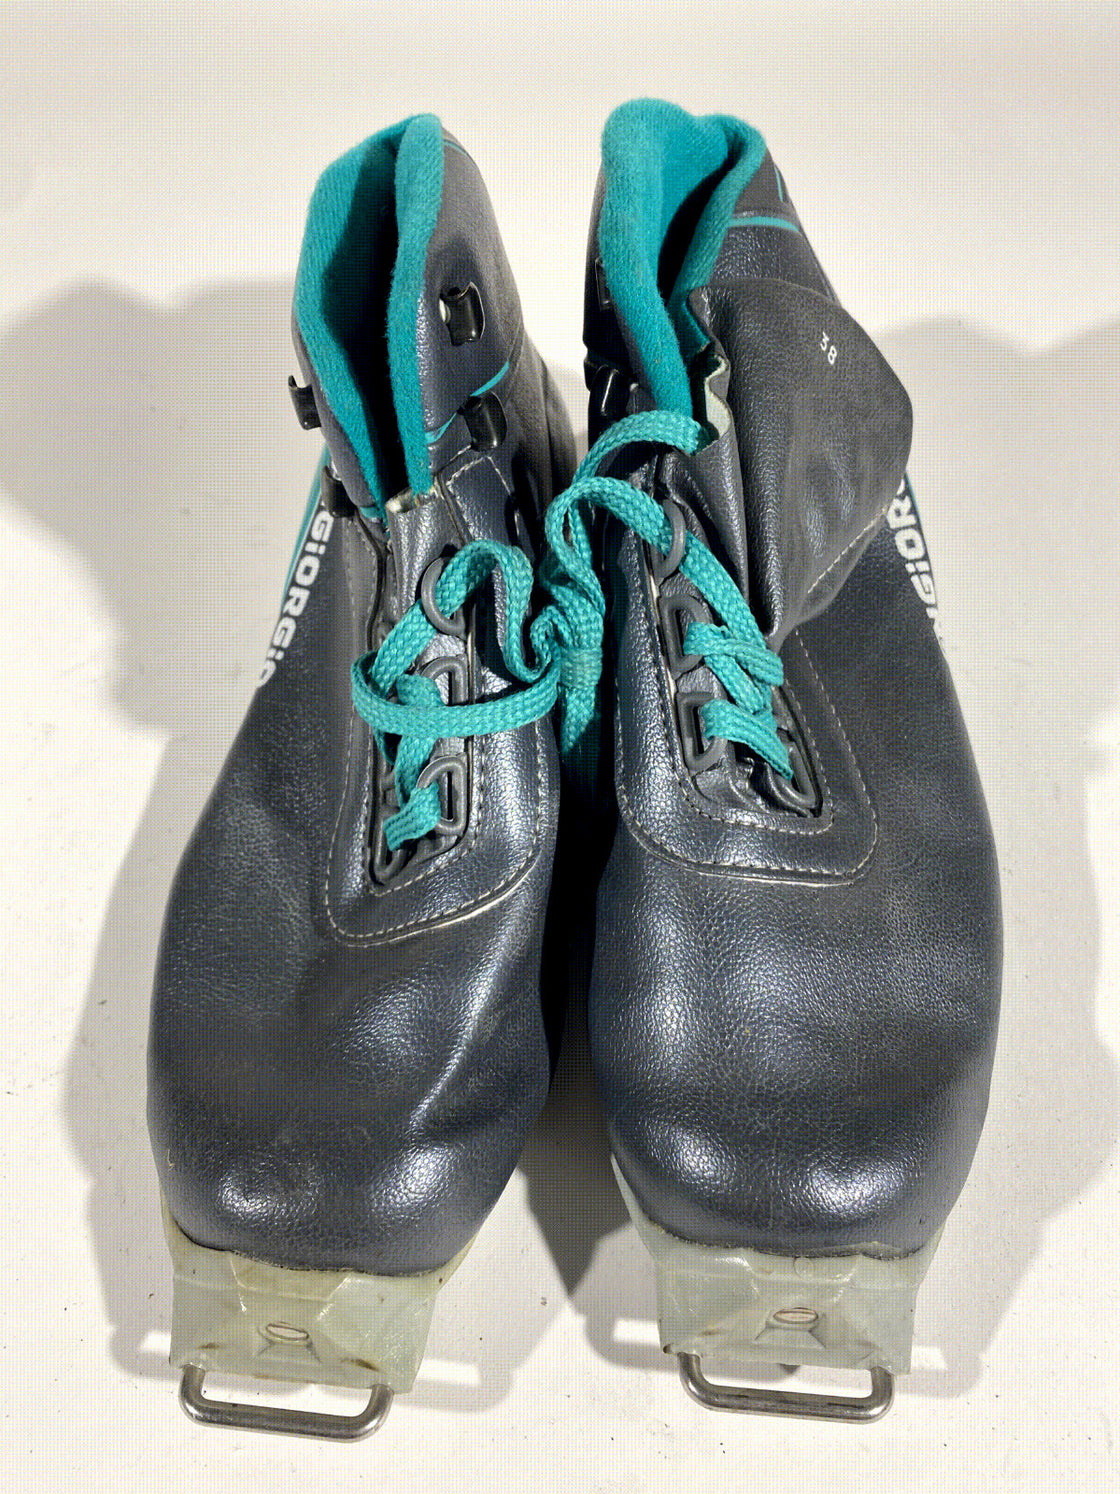 San Giorgio Vintage Nordic Cross Country Ski Boots Size EU38 US6 for SNS Old